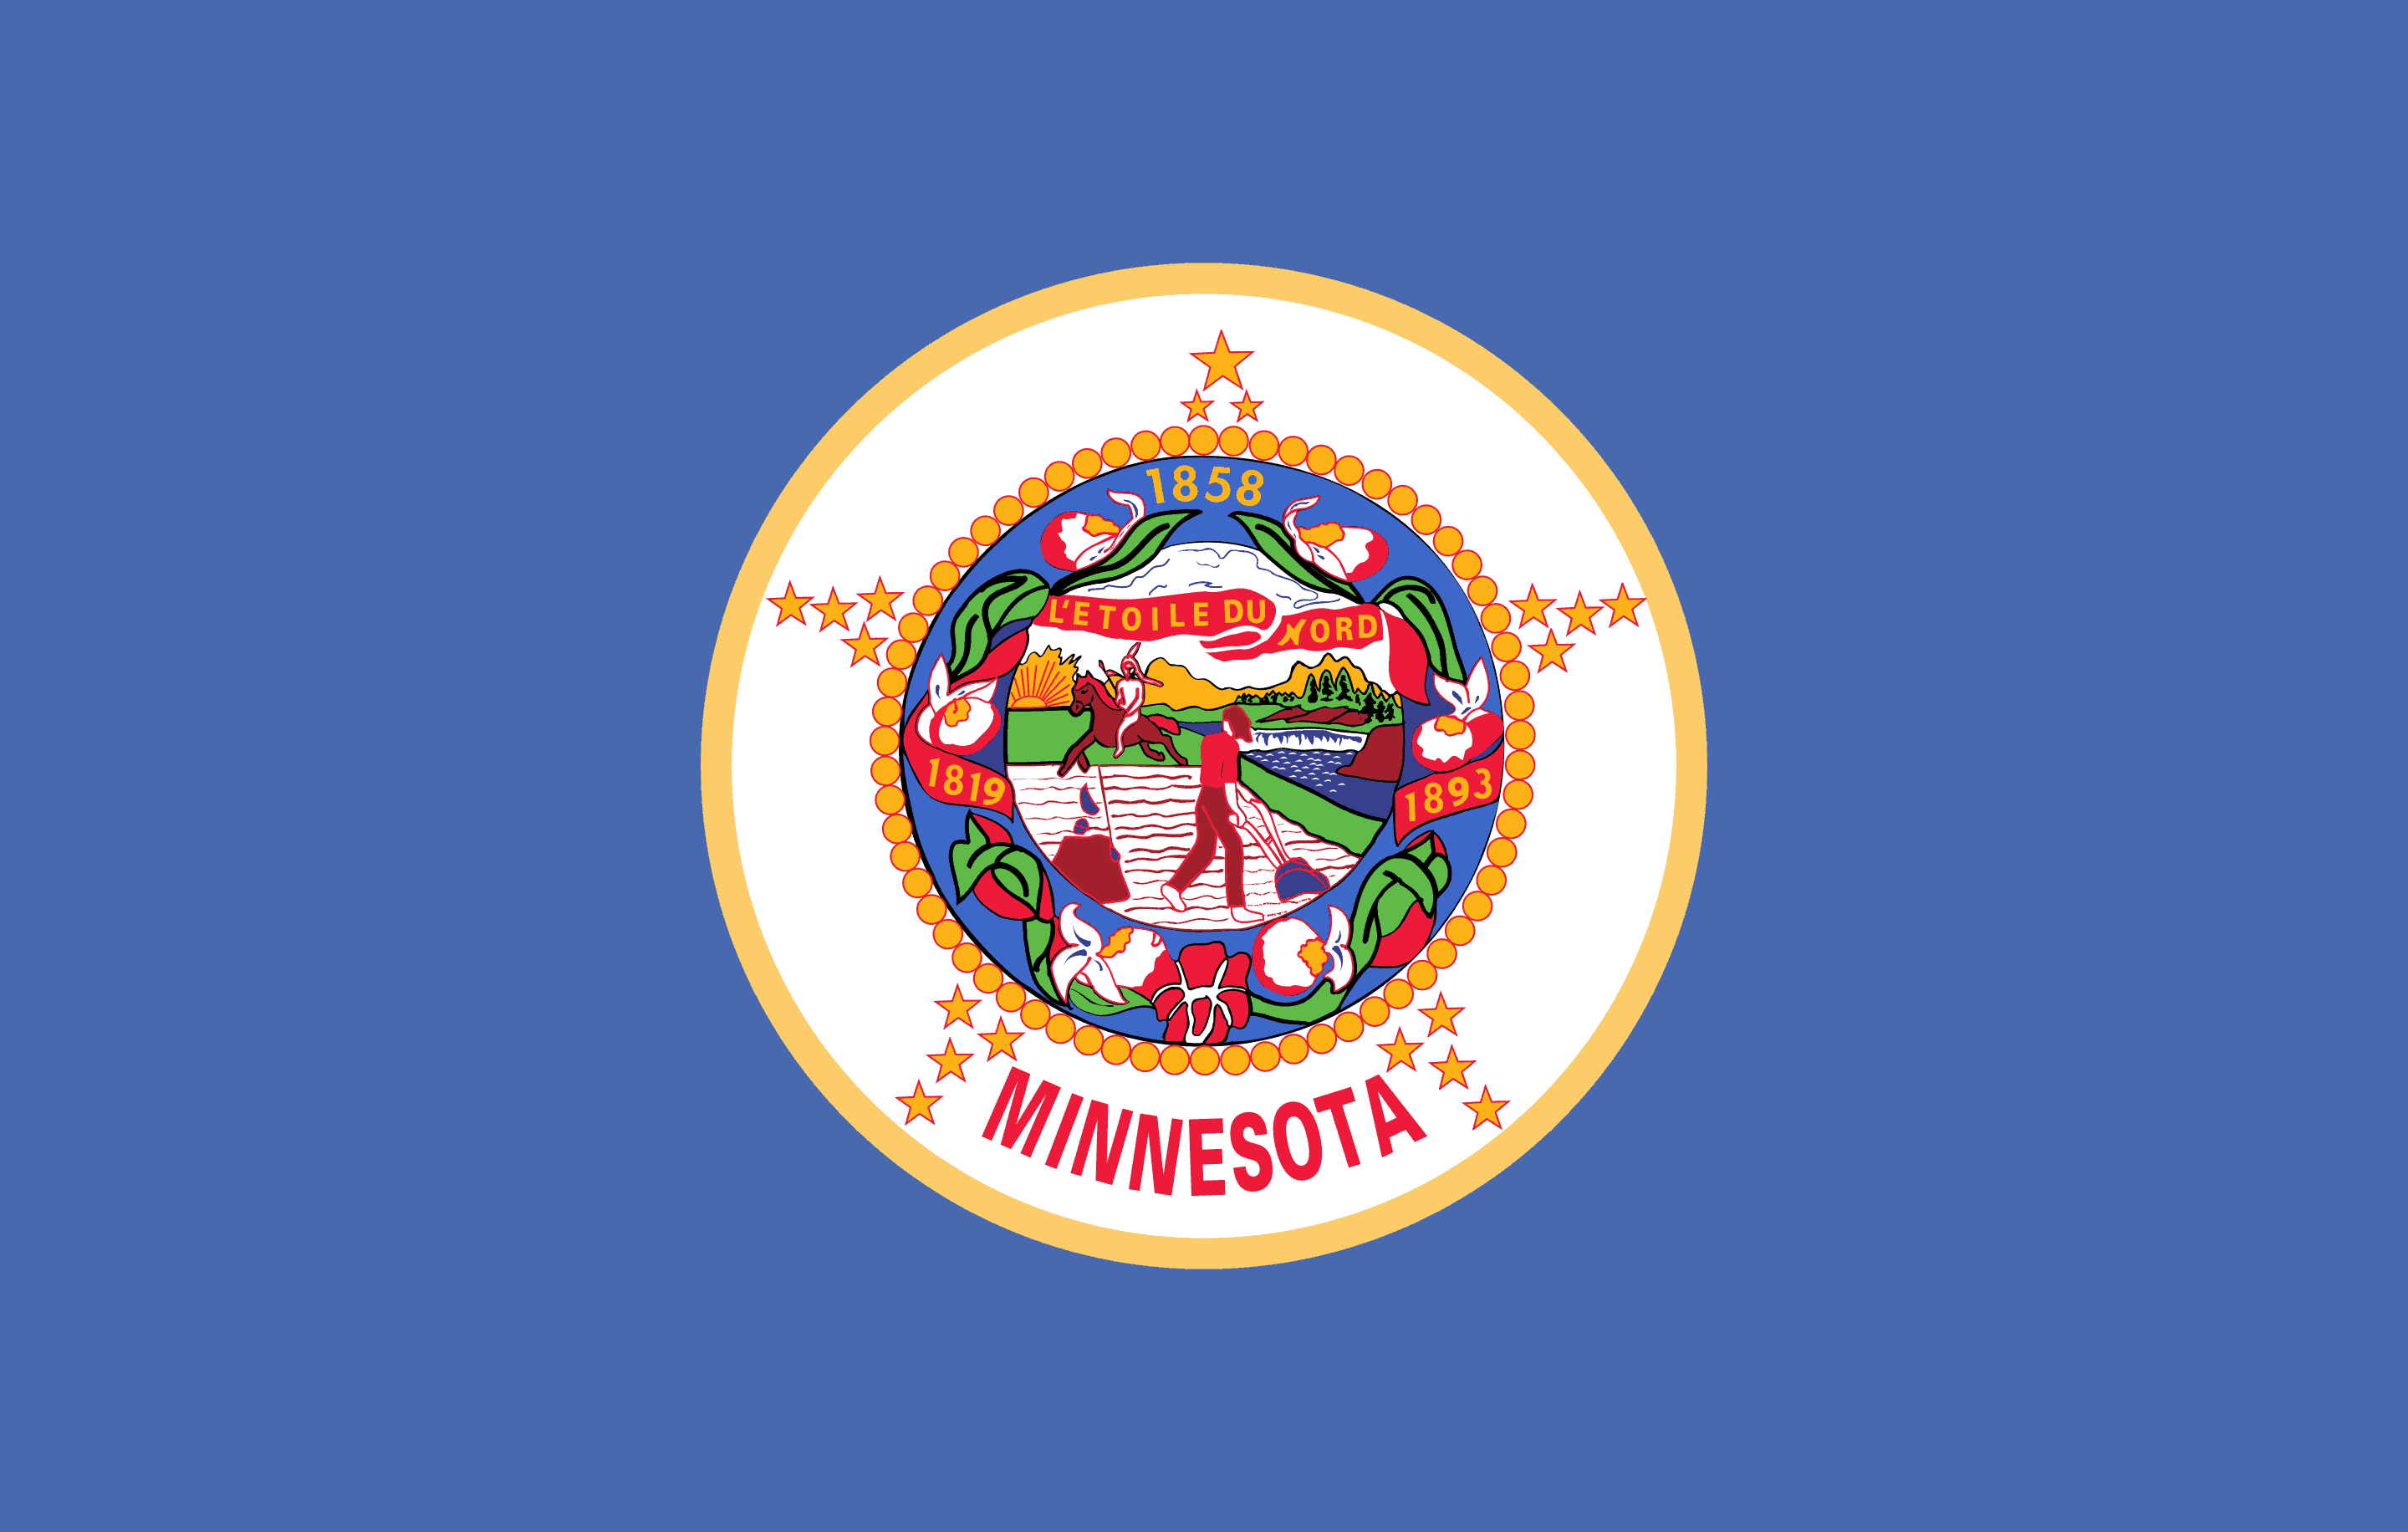 Drone Laws in Minnesota